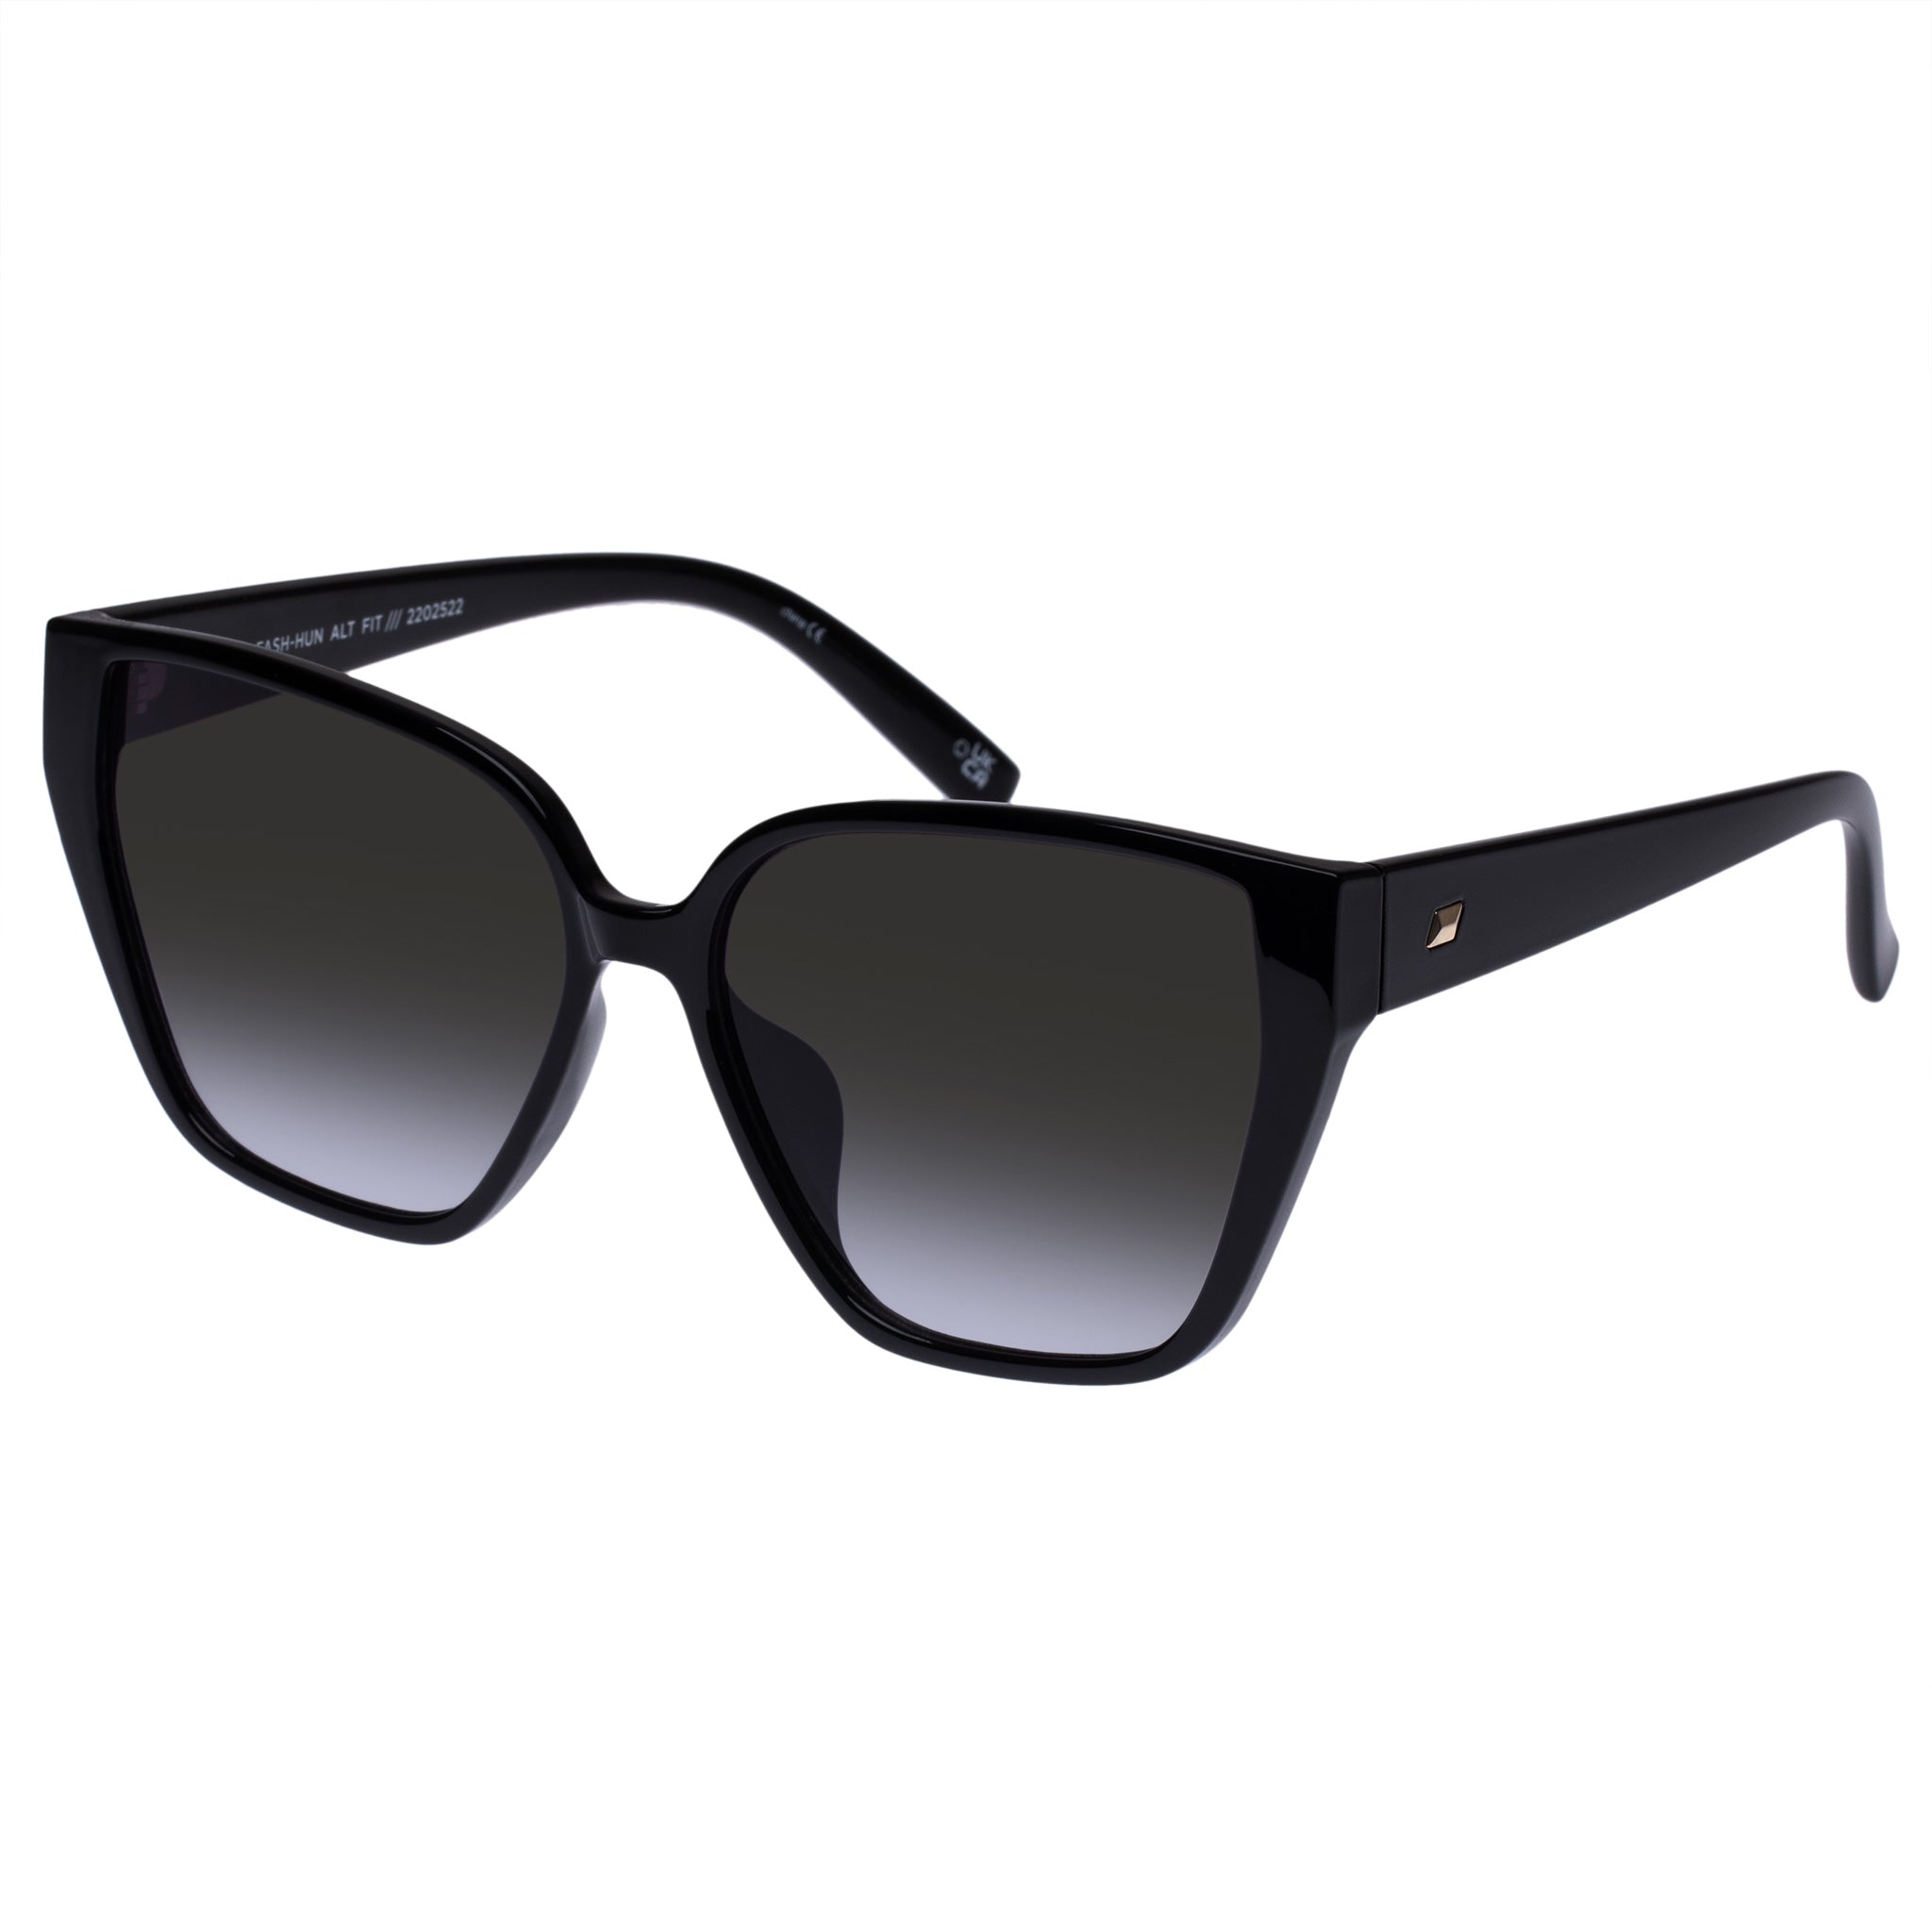 Le Specs Fash-hun solbrille, black